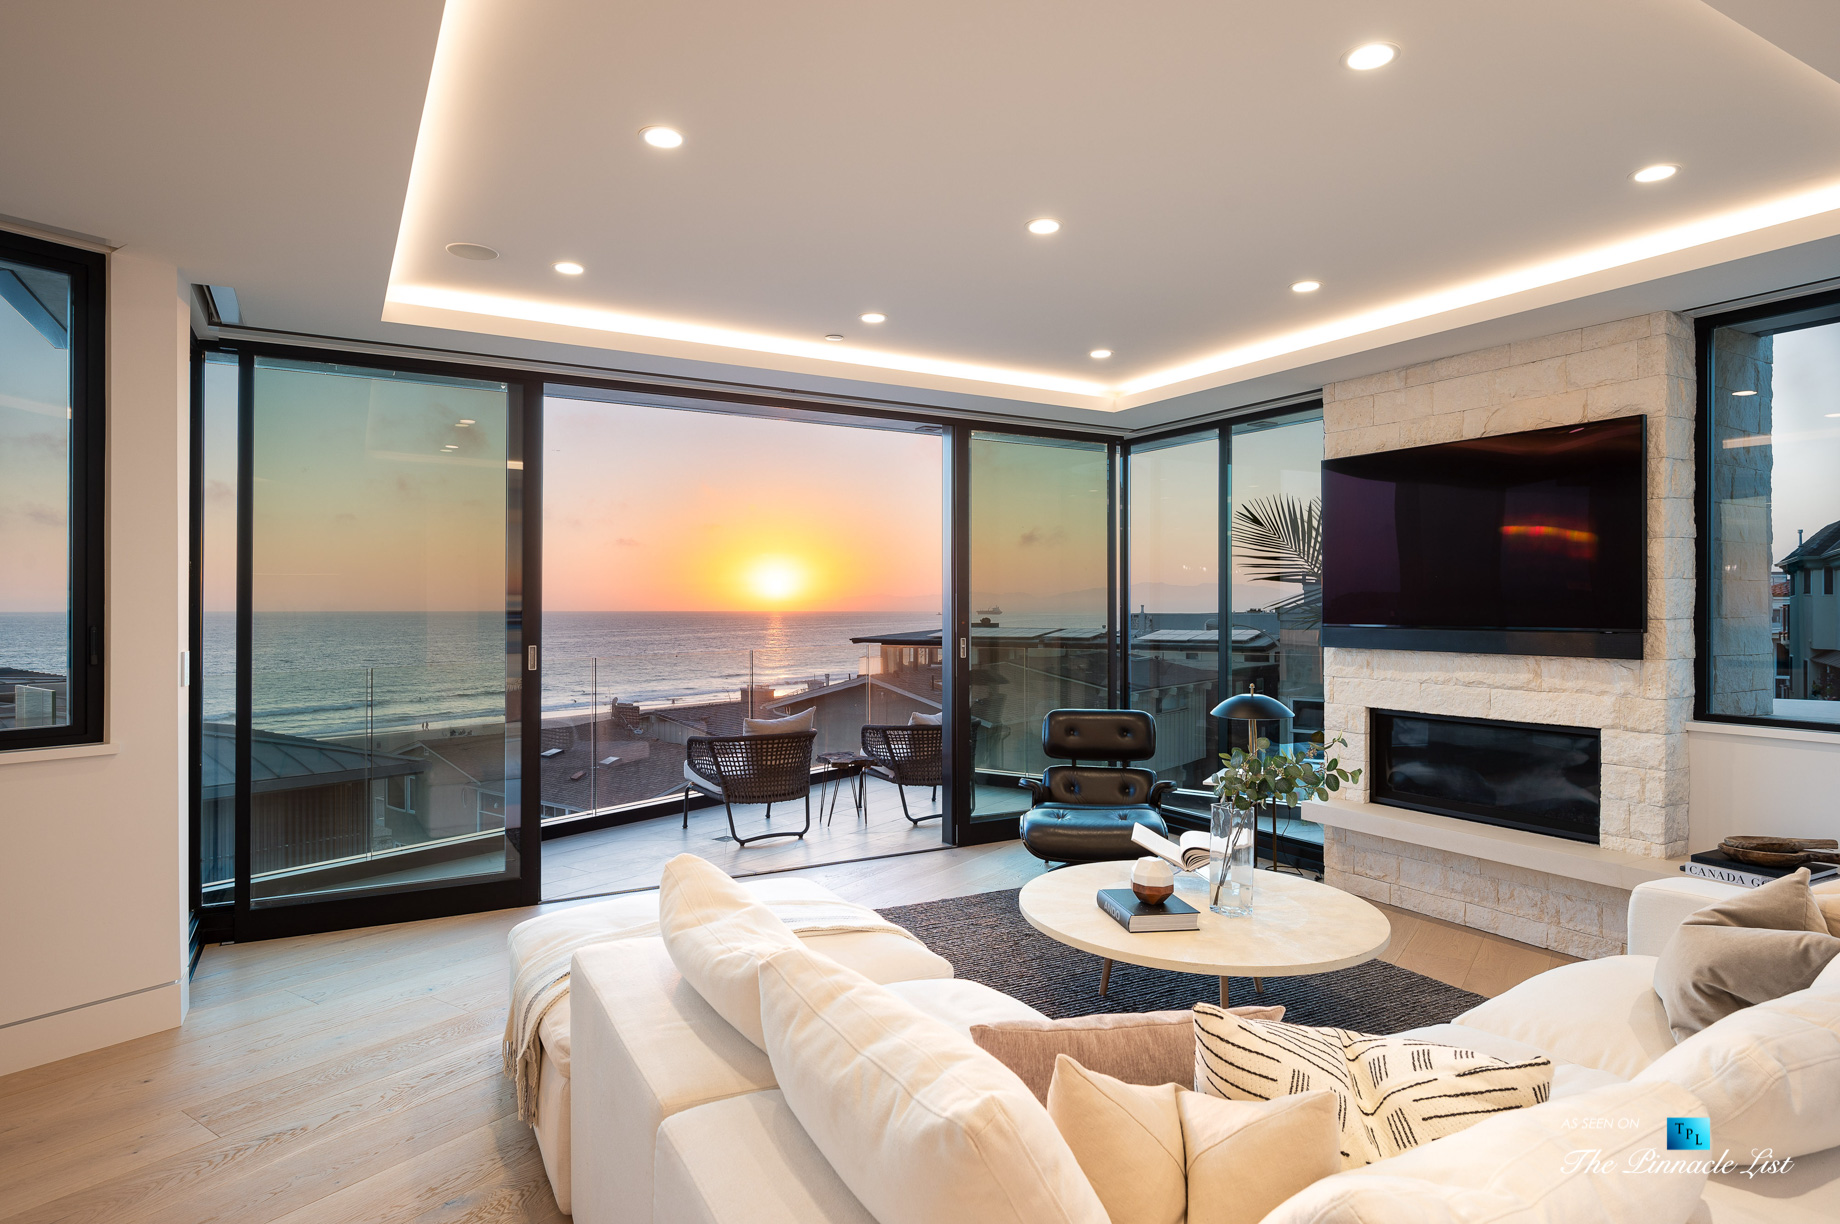 2016 Ocean Dr, Manhattan Beach, CA, USA - Sunset Living Room View - Luxury Real Estate - Modern Ocean View Home